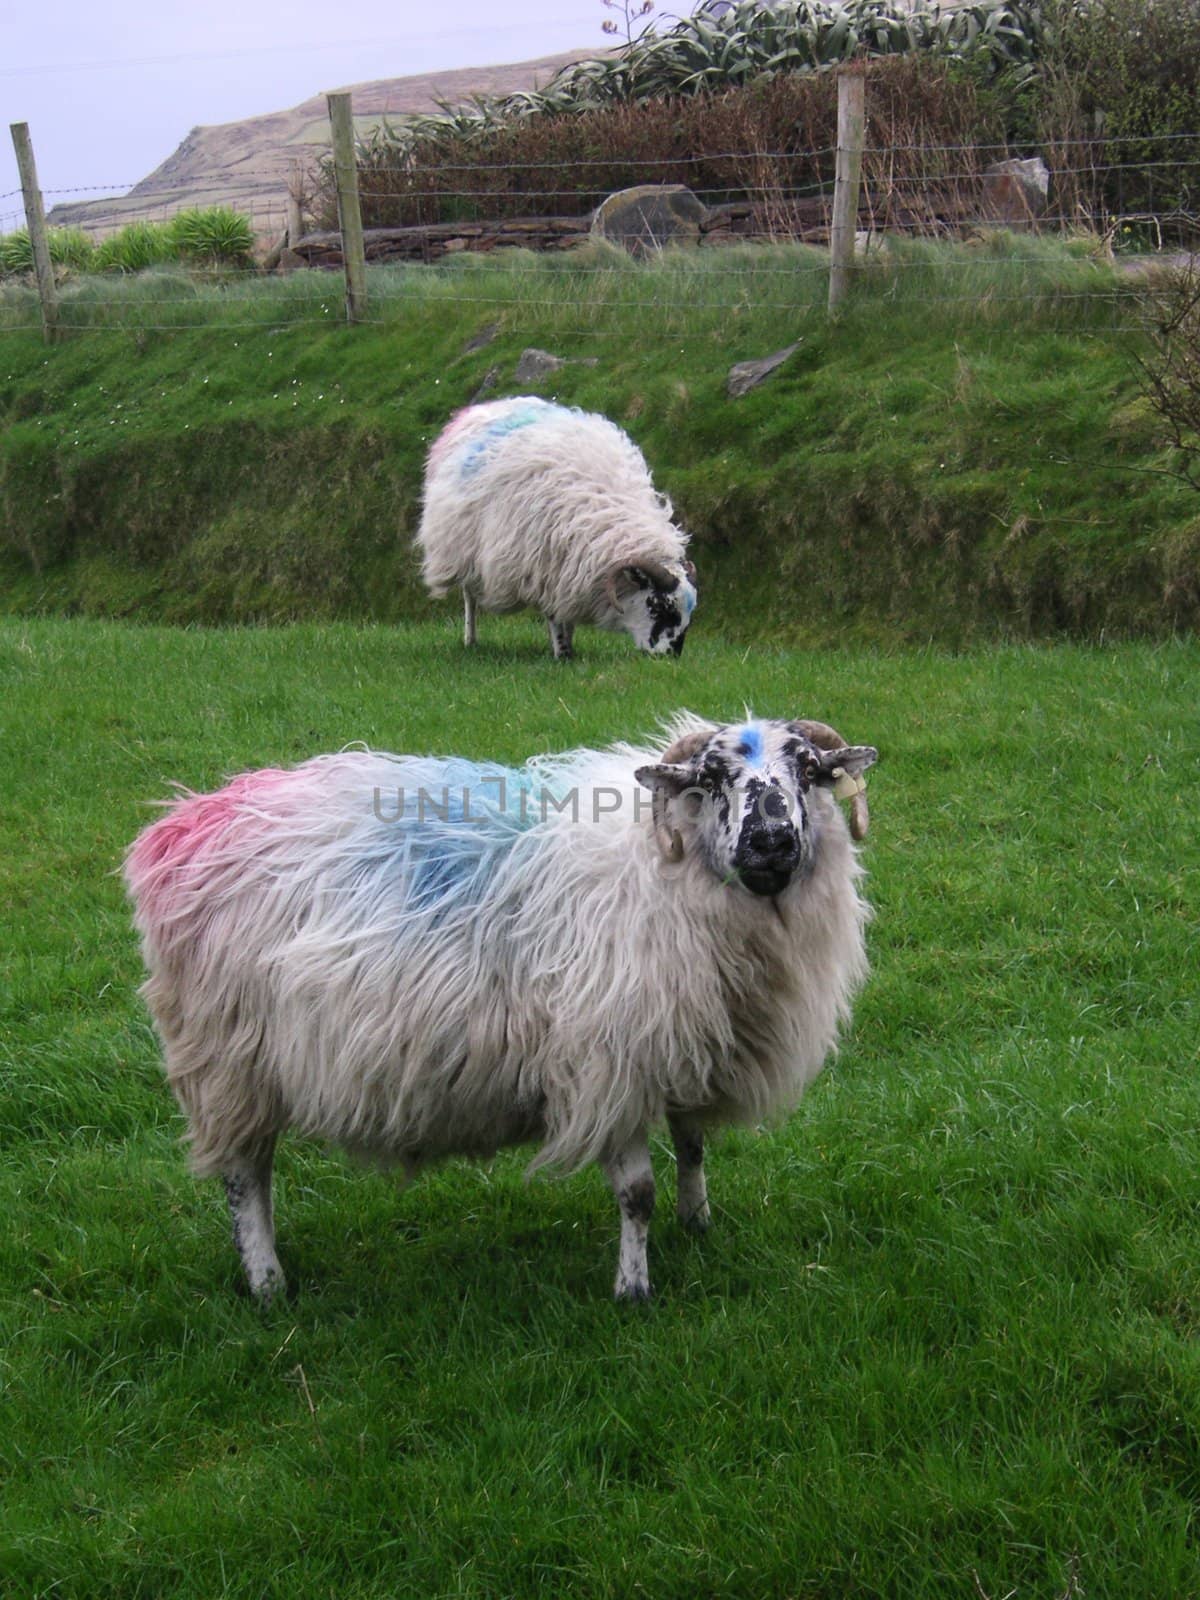 Some Irish sheep standing on a meadow